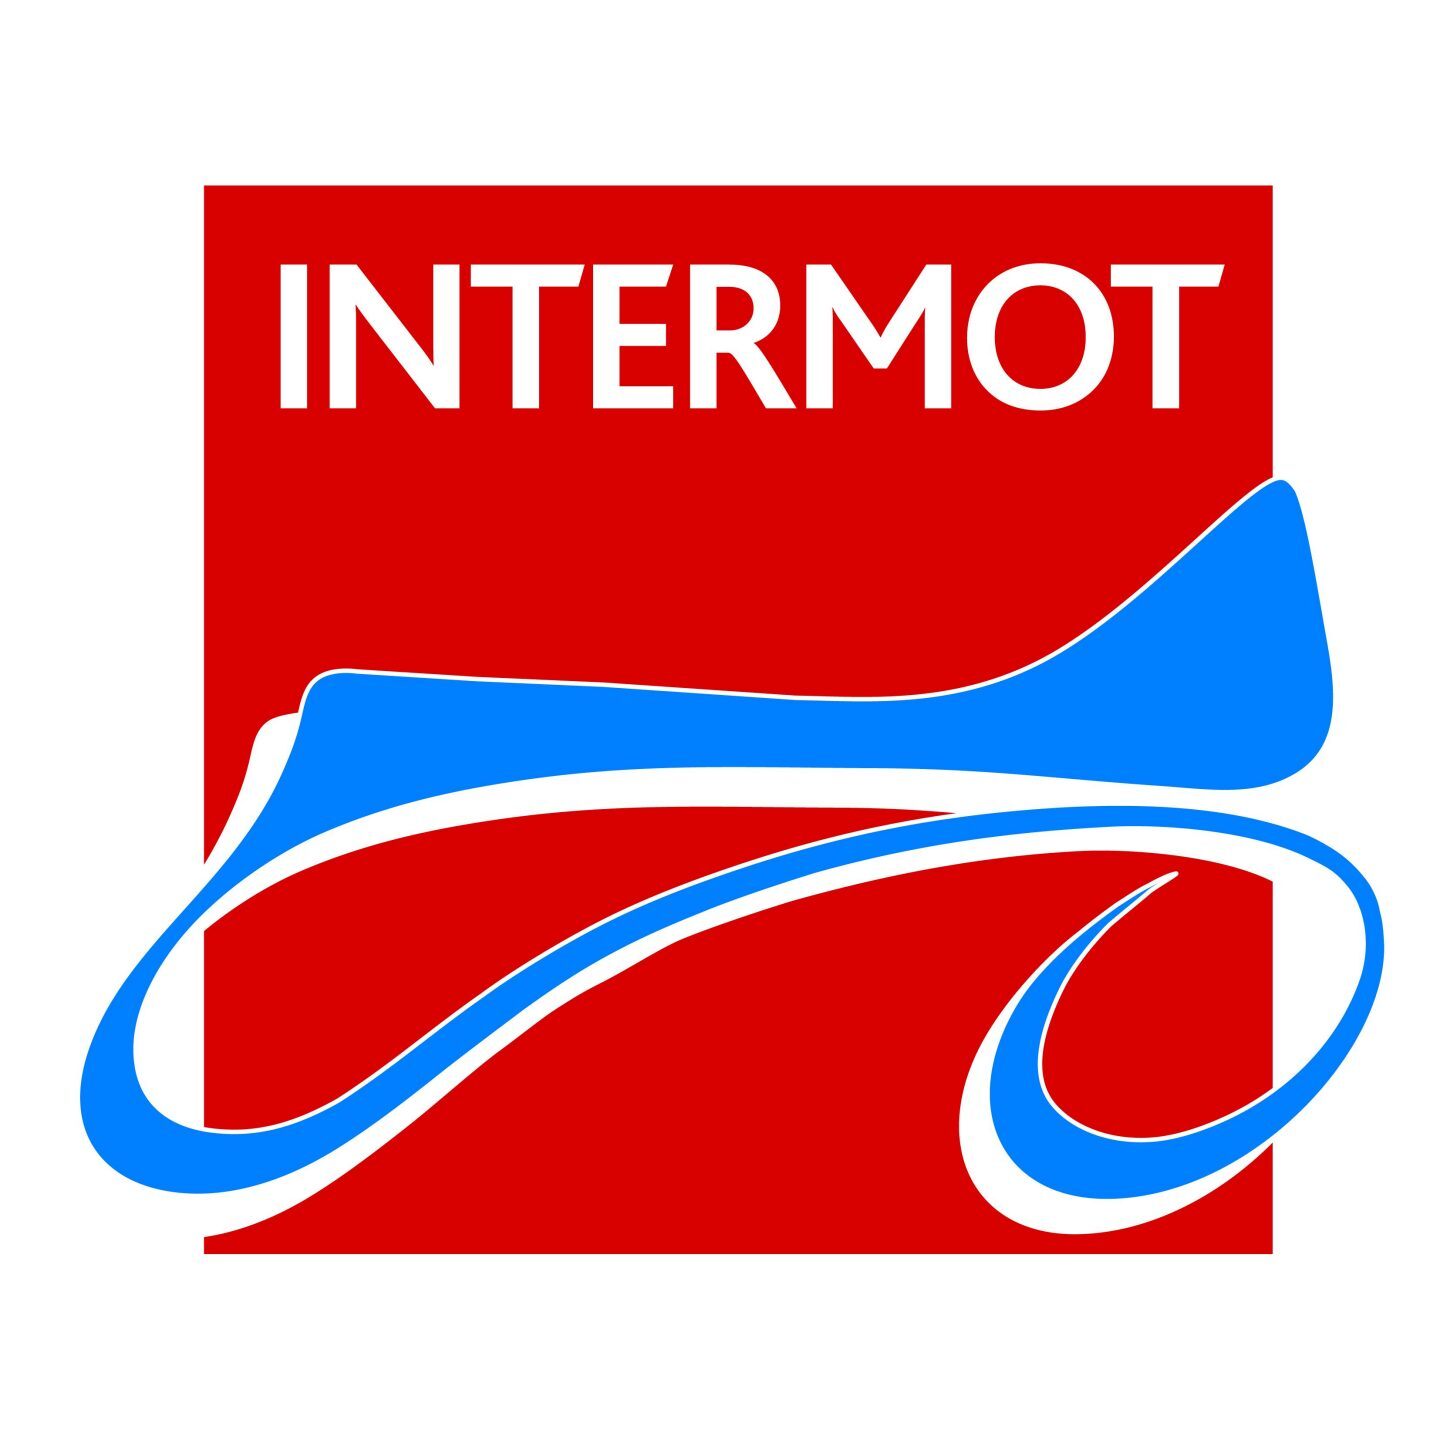 INTERMOT Messe- Hostessen Agentur Köln